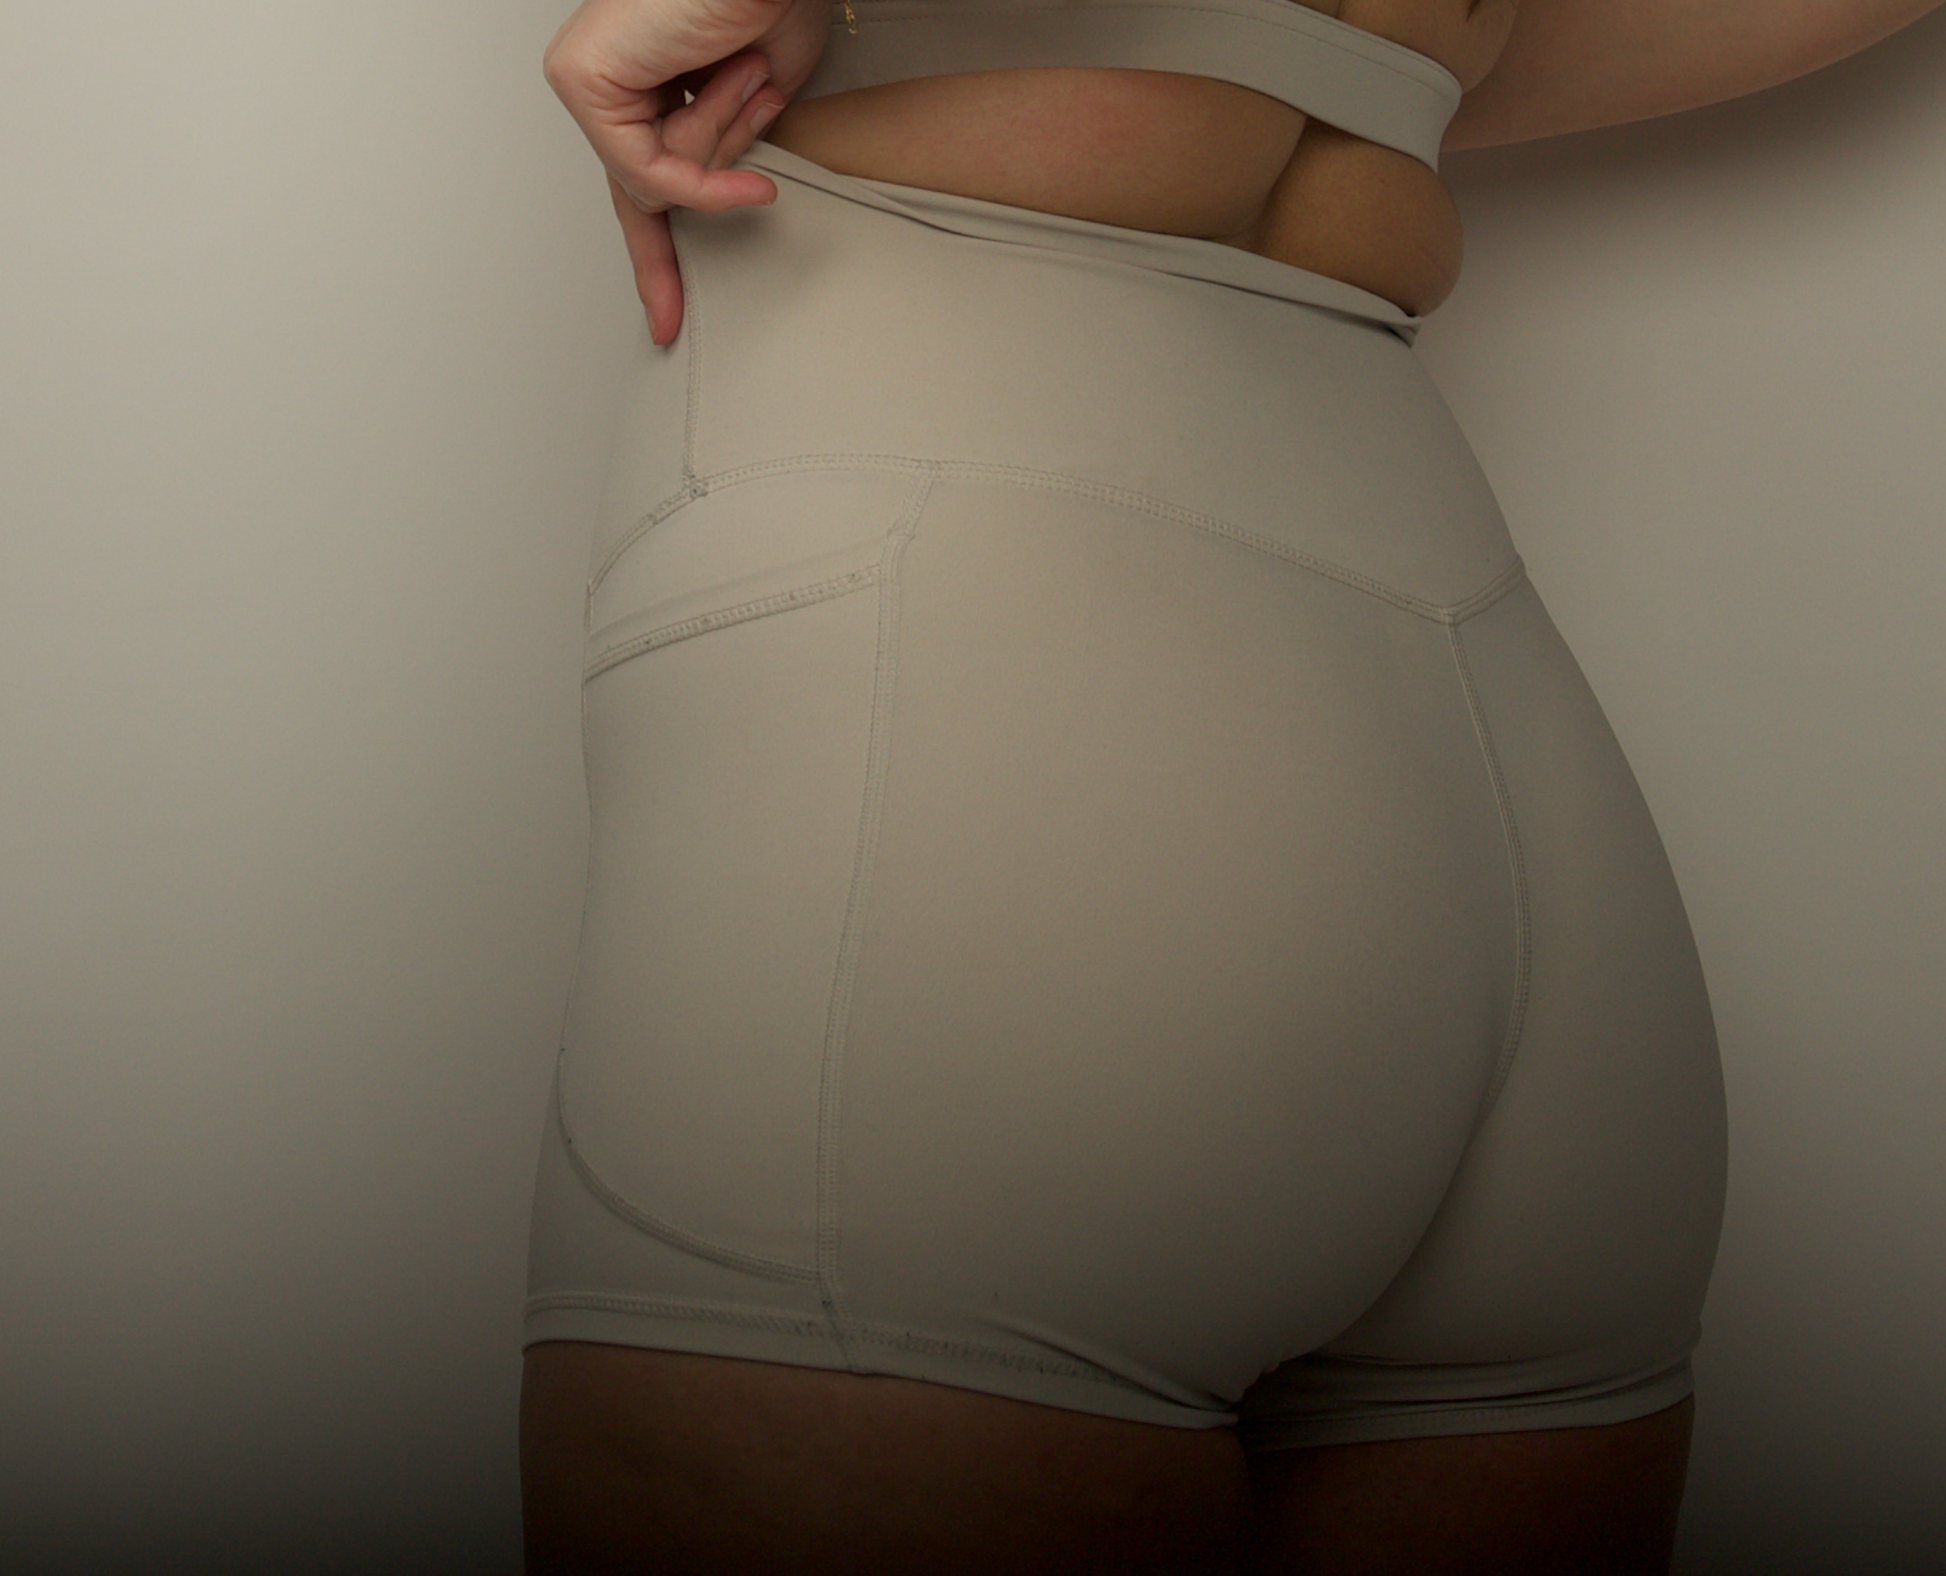 Flattering Sandy Beige Sports Shorts: Designed to Enhance Your Shape